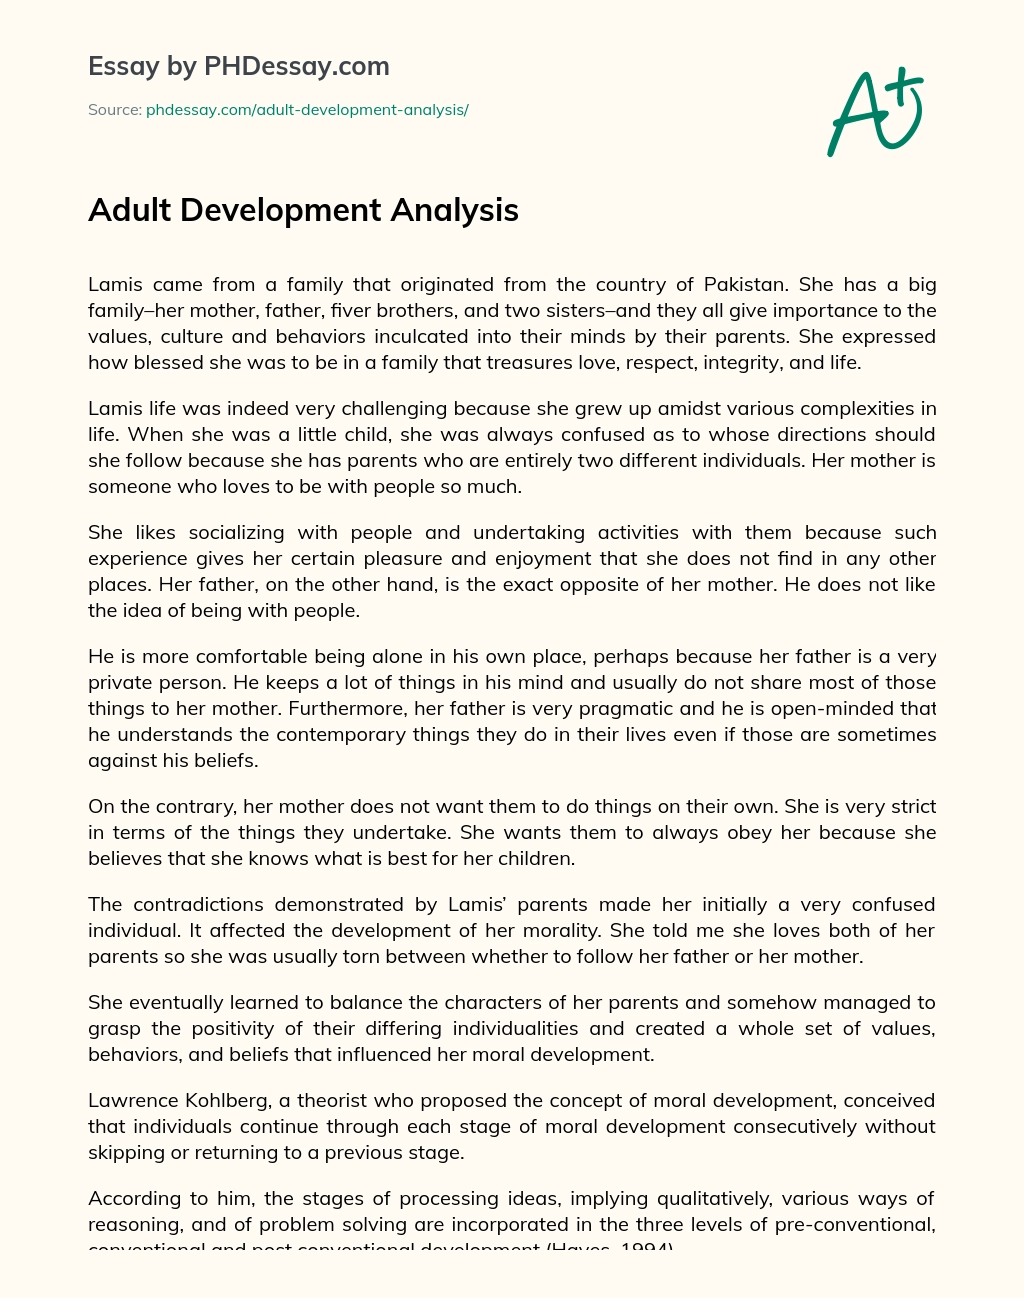 Adult Development Analysis essay